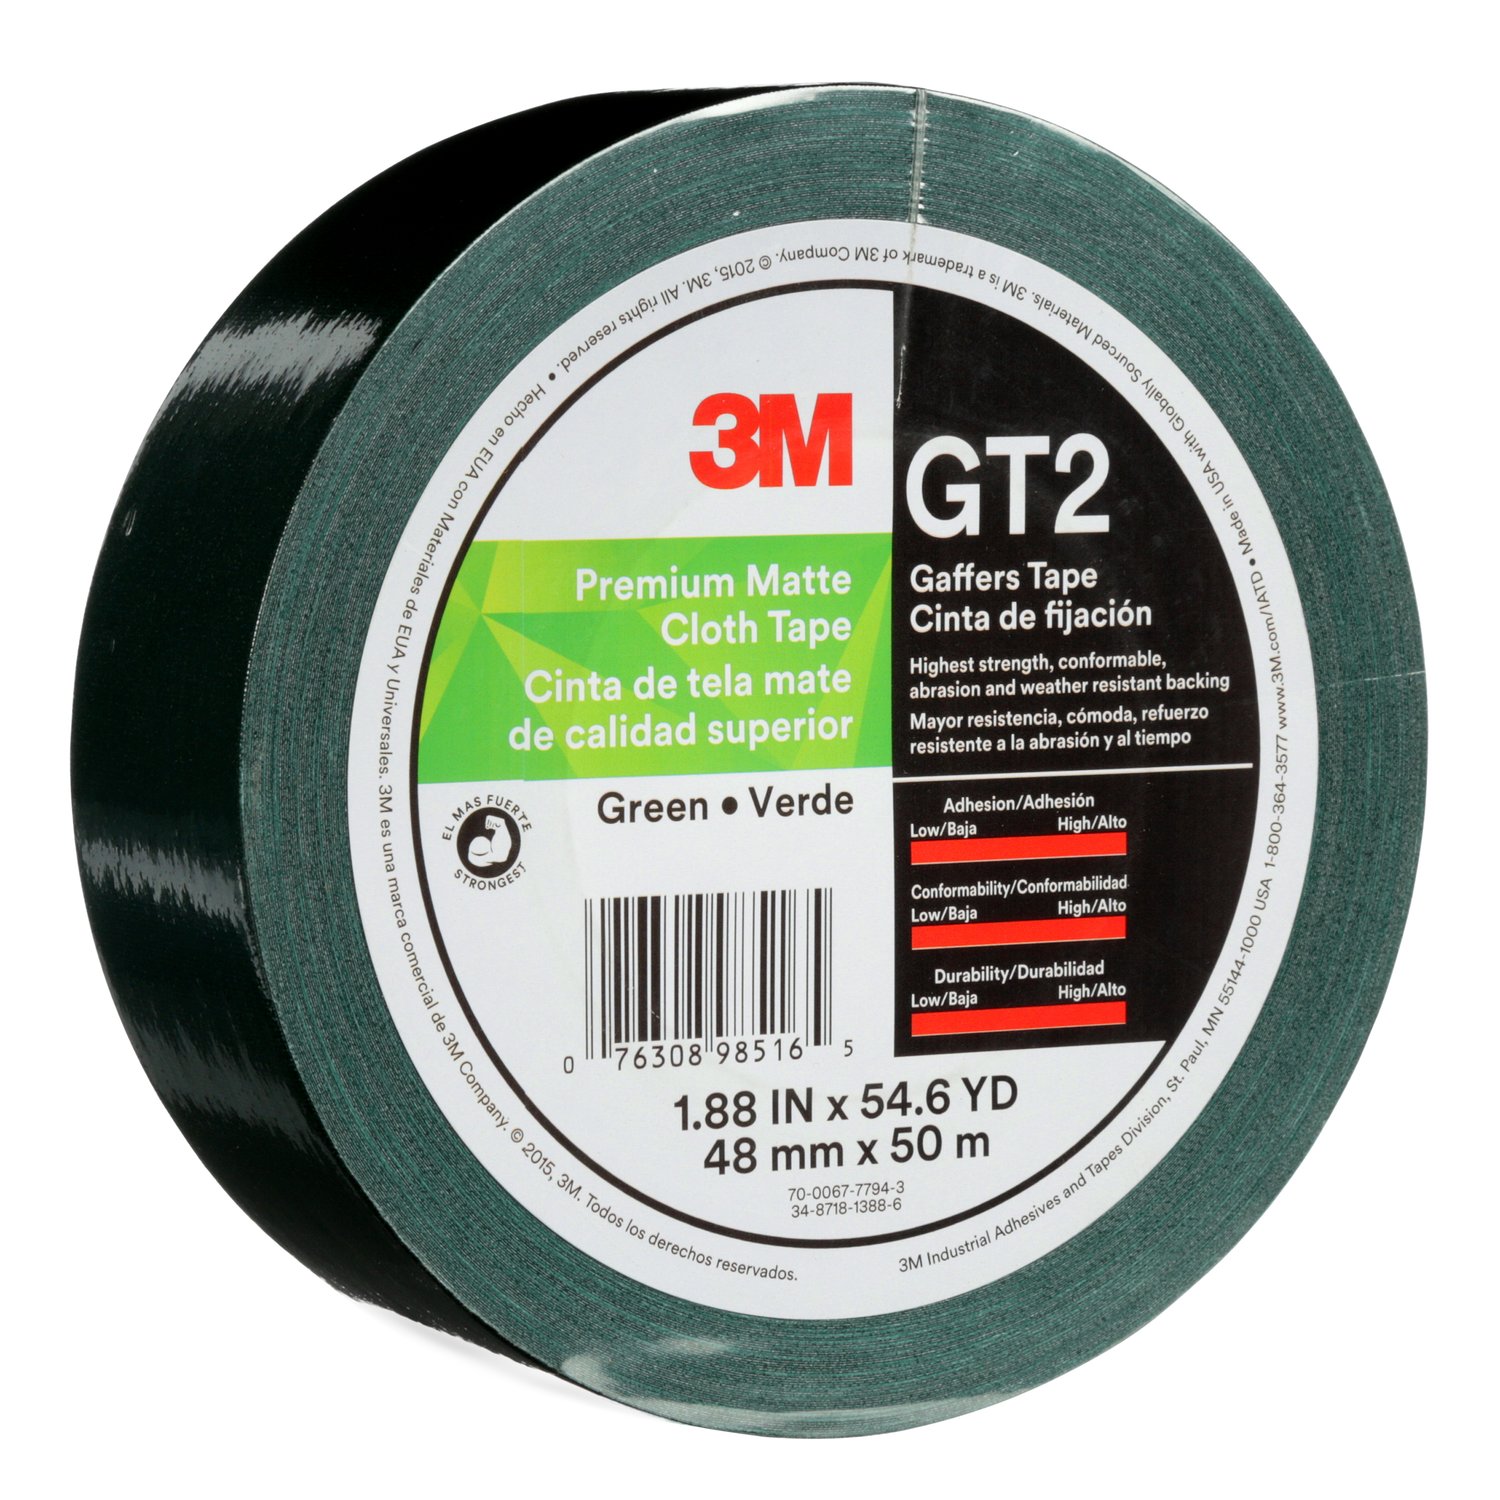 7010312516 - 3M Premium Matte Cloth (Gaffers) Tape GT2, Green, 48 mm x 50 m, 11 mil,
24/Case